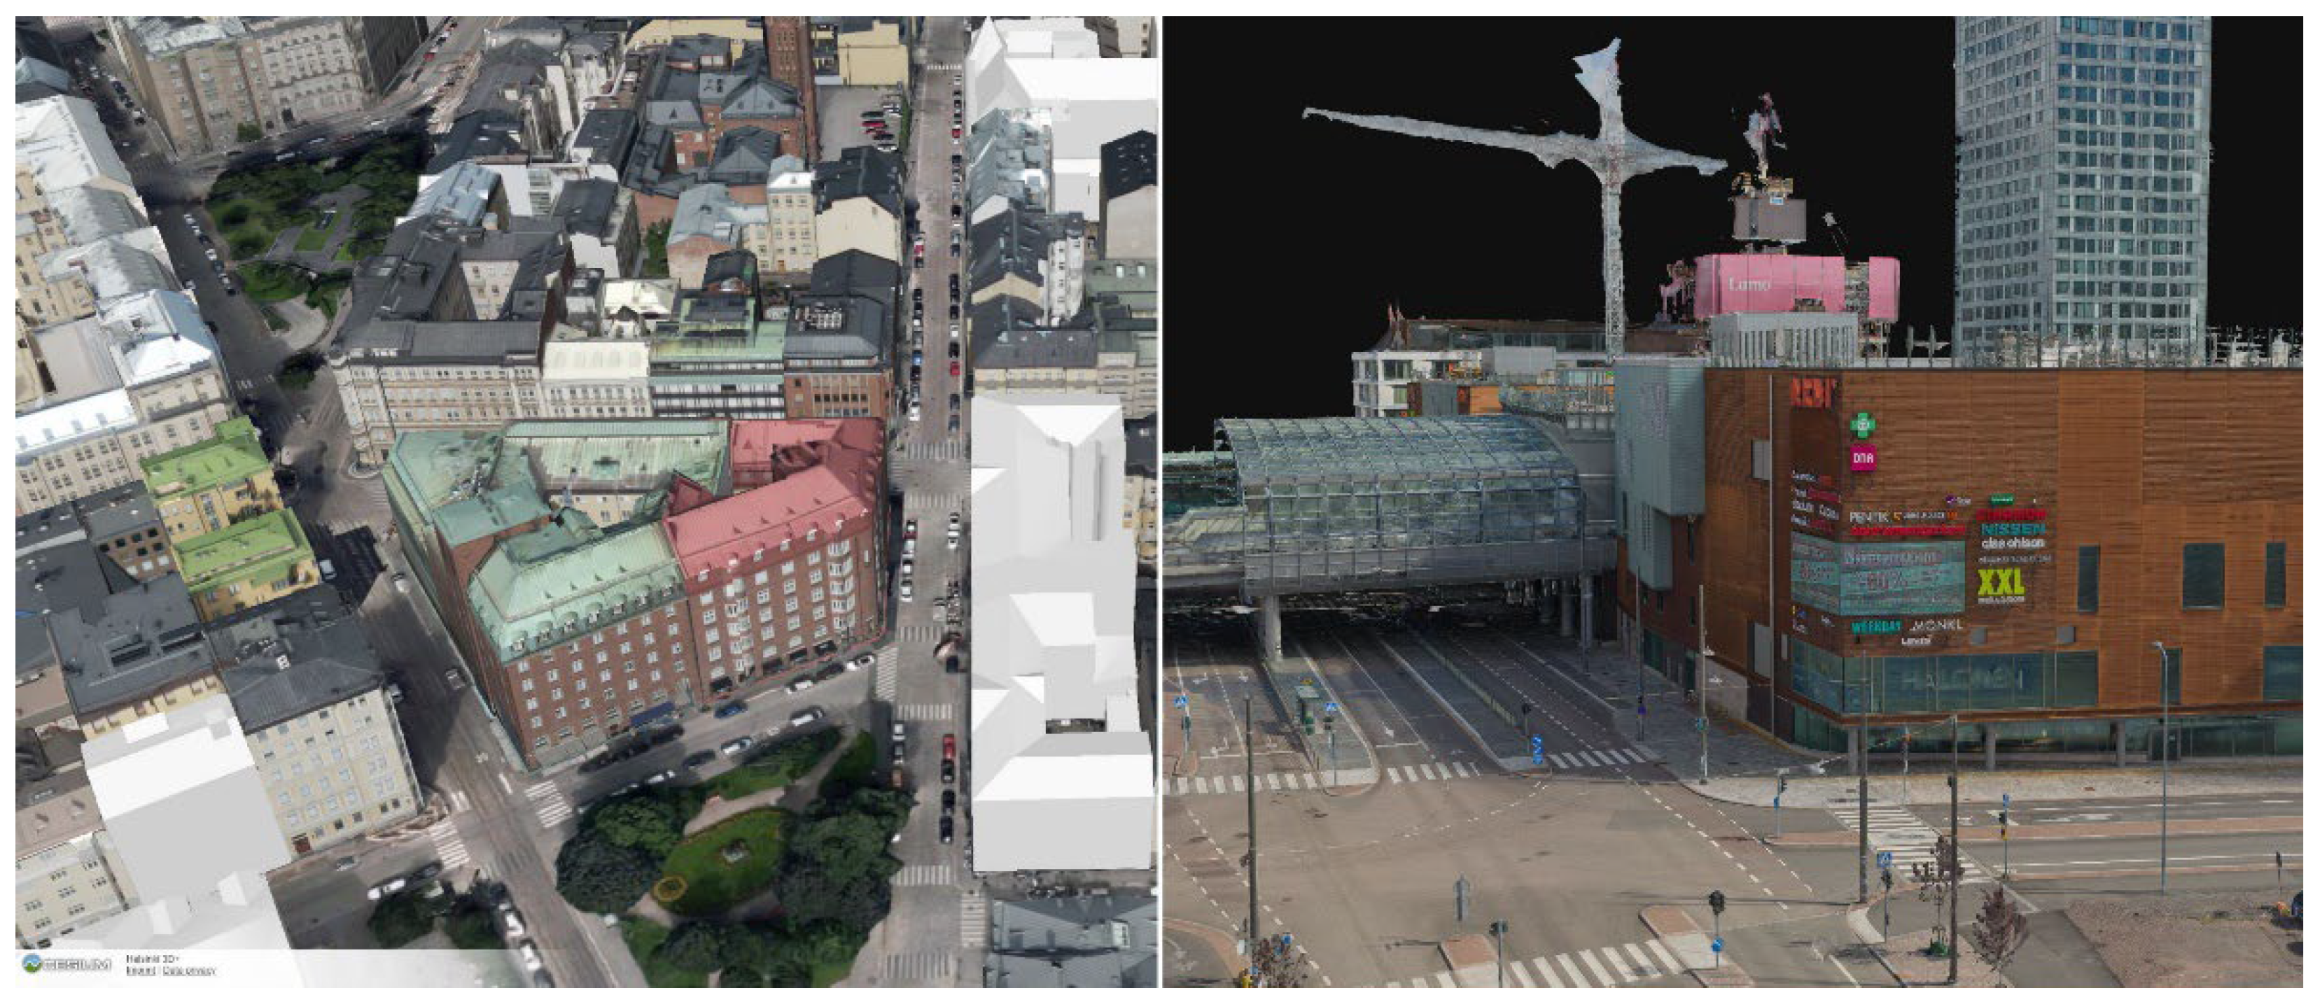 Roblox Tutorial for City Creation - Part 2 - City Design & Google Map 